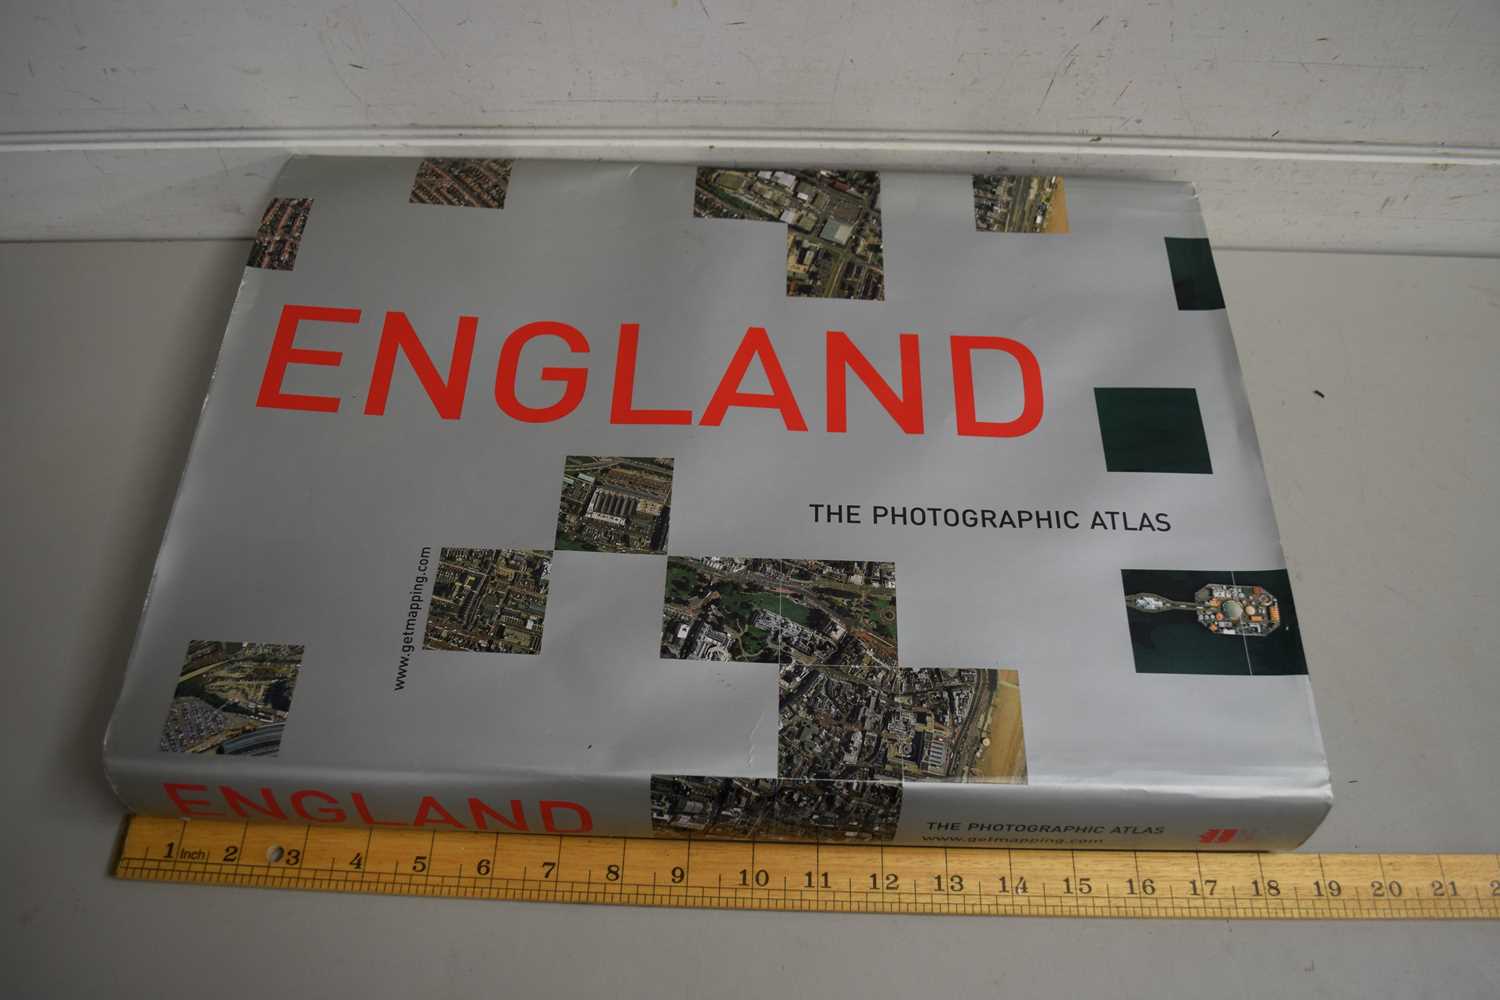 ENGLAND, THE PHOTOGRAPHIC ATLAS